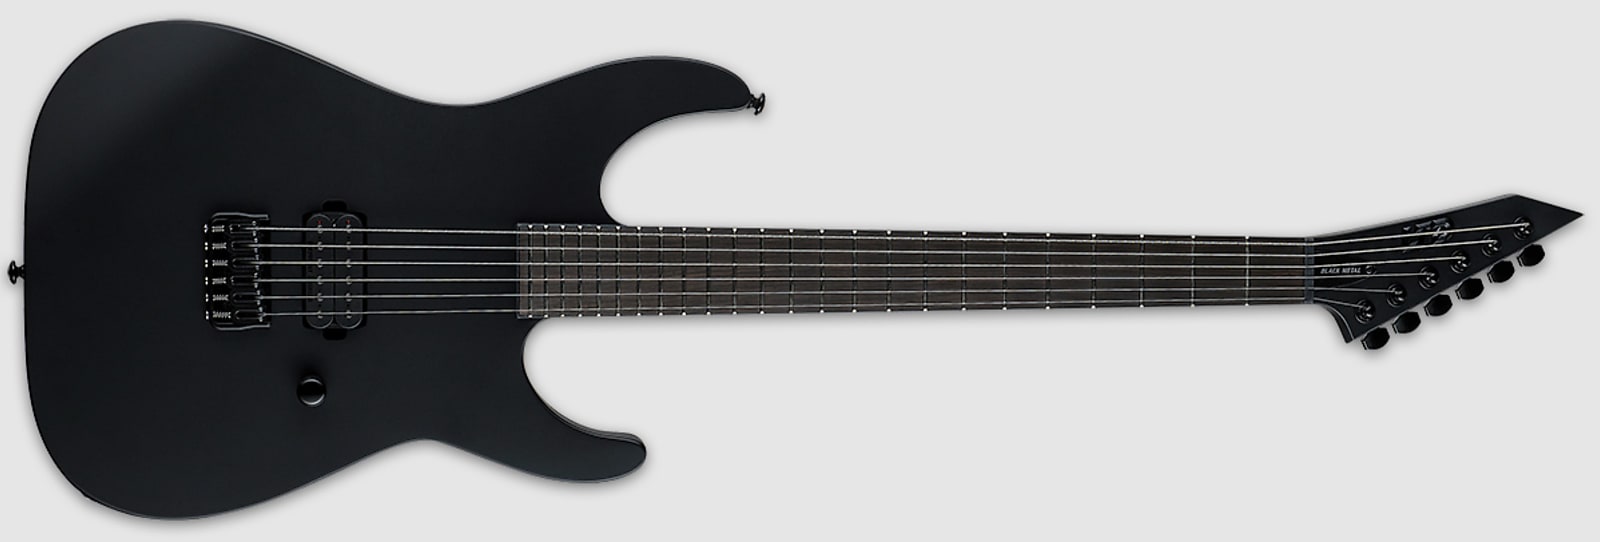 ESP LTD M-HT Black Metal Guitar - Black Satin